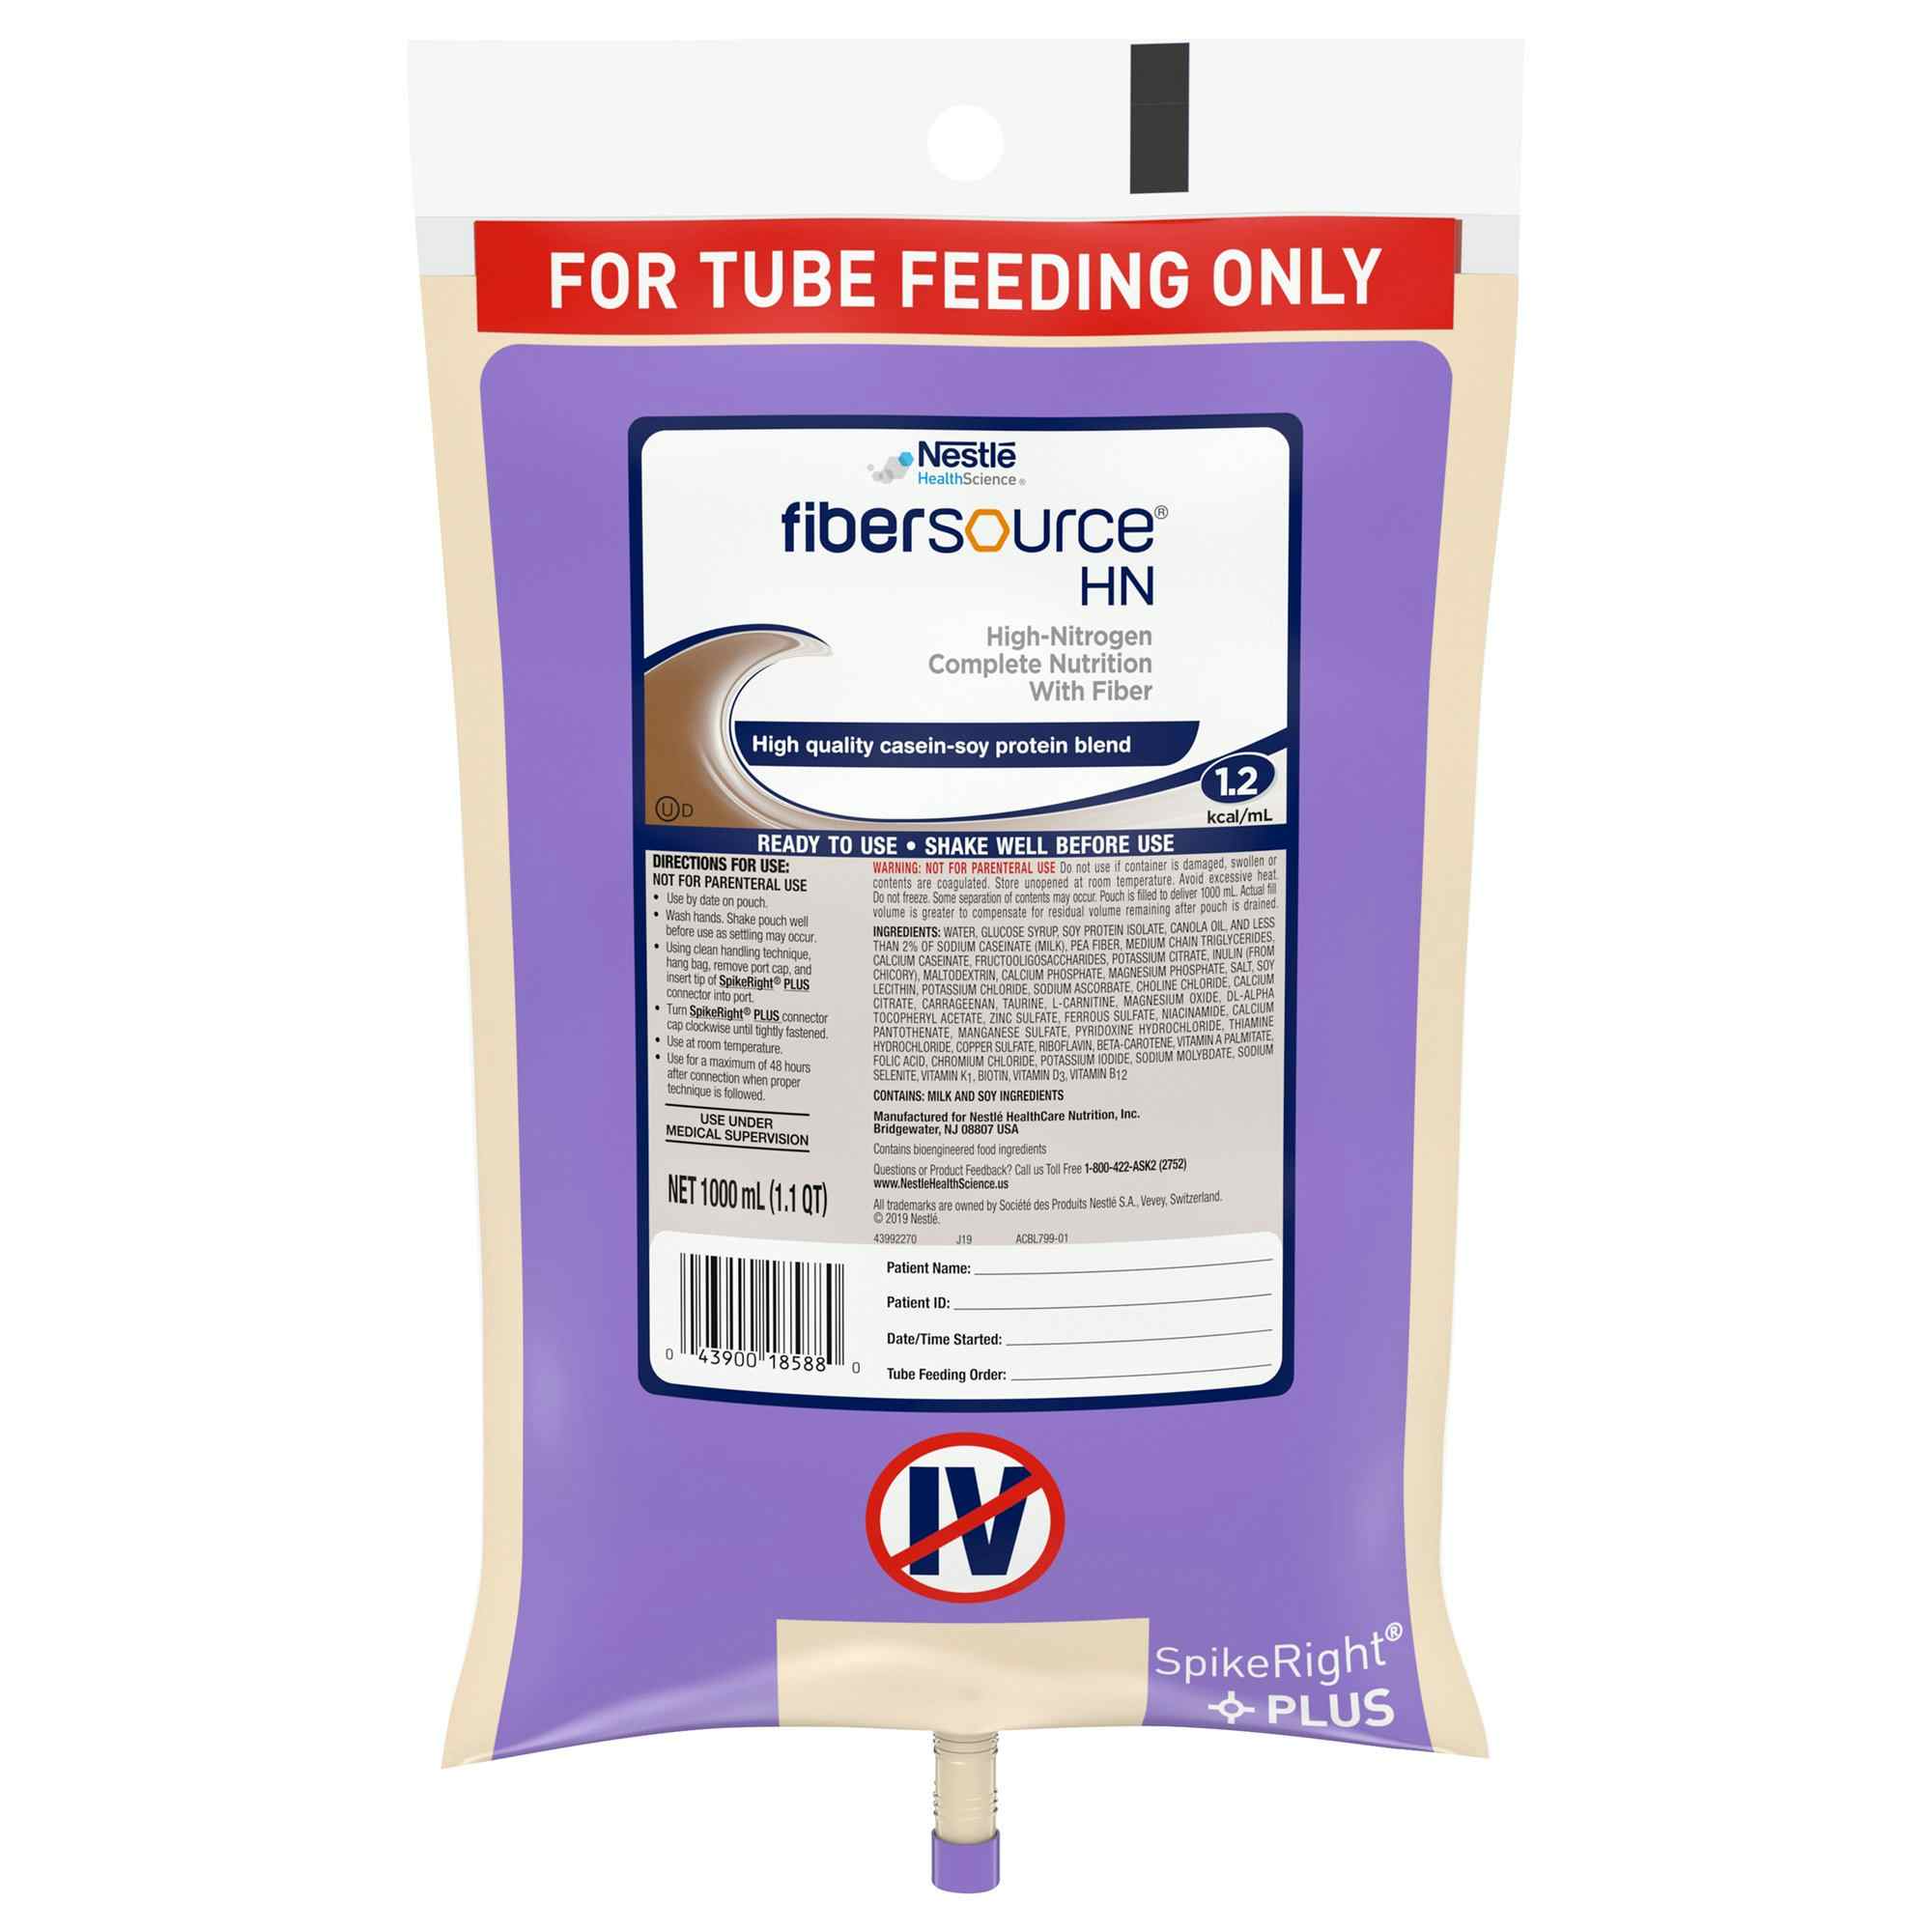 Fibersource HN High-Nitrogen Complete Nutrition with Fiber Tube Feeding Formula, 10043900185887, 33.8 oz. - Case of 6